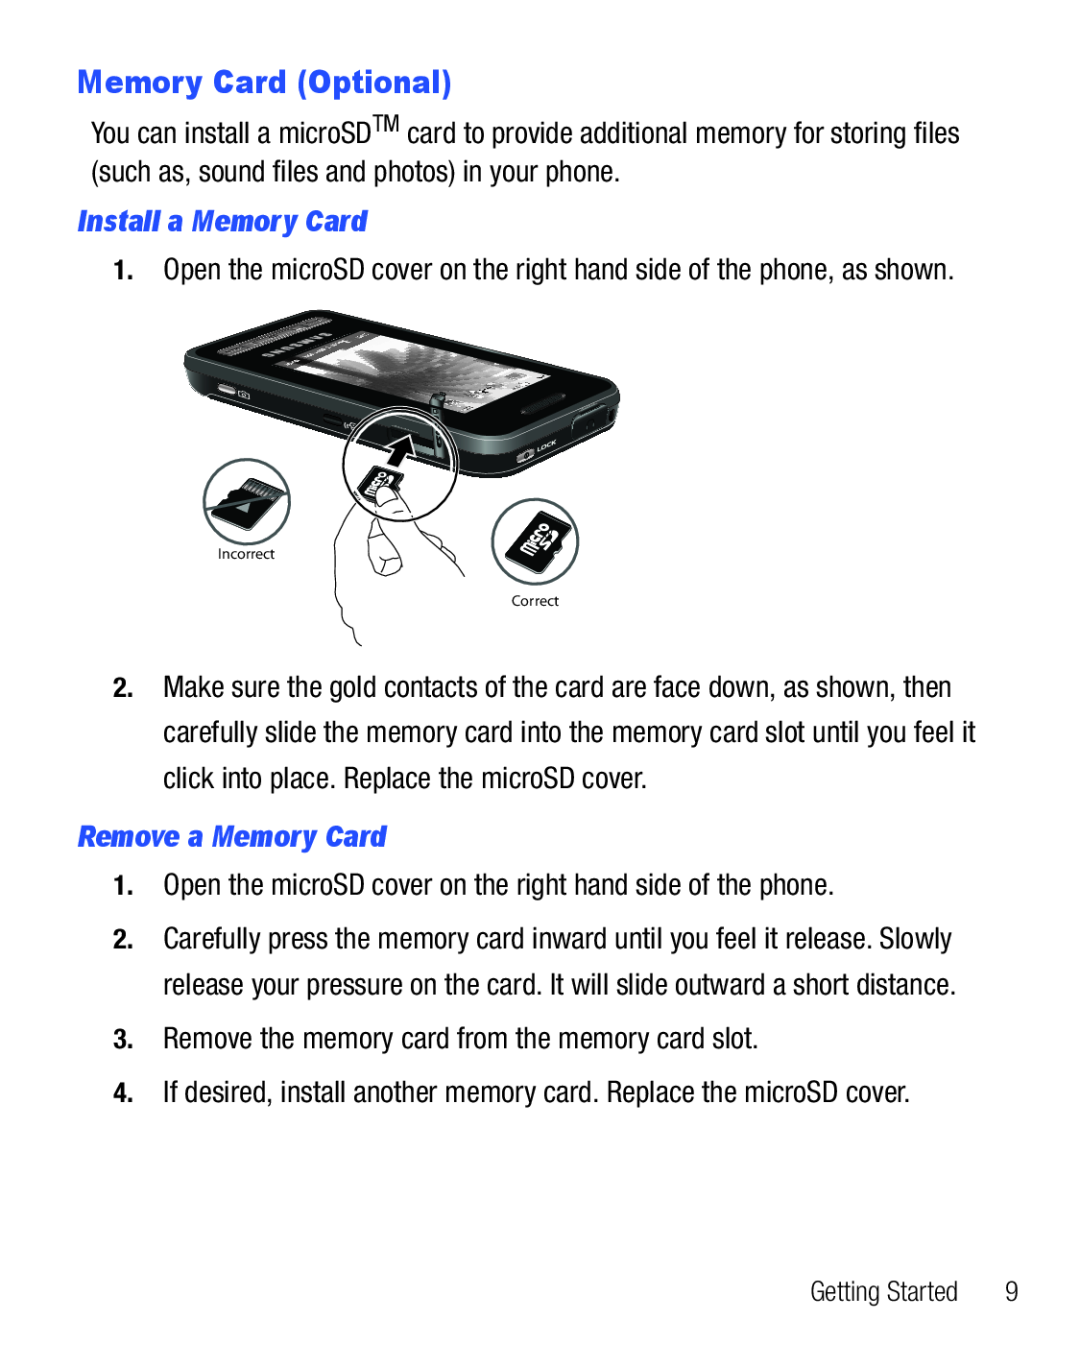 Samsung GH68-25119A user manual Memory Card Optional, Install a Memory Card, Remove a Memory Card 